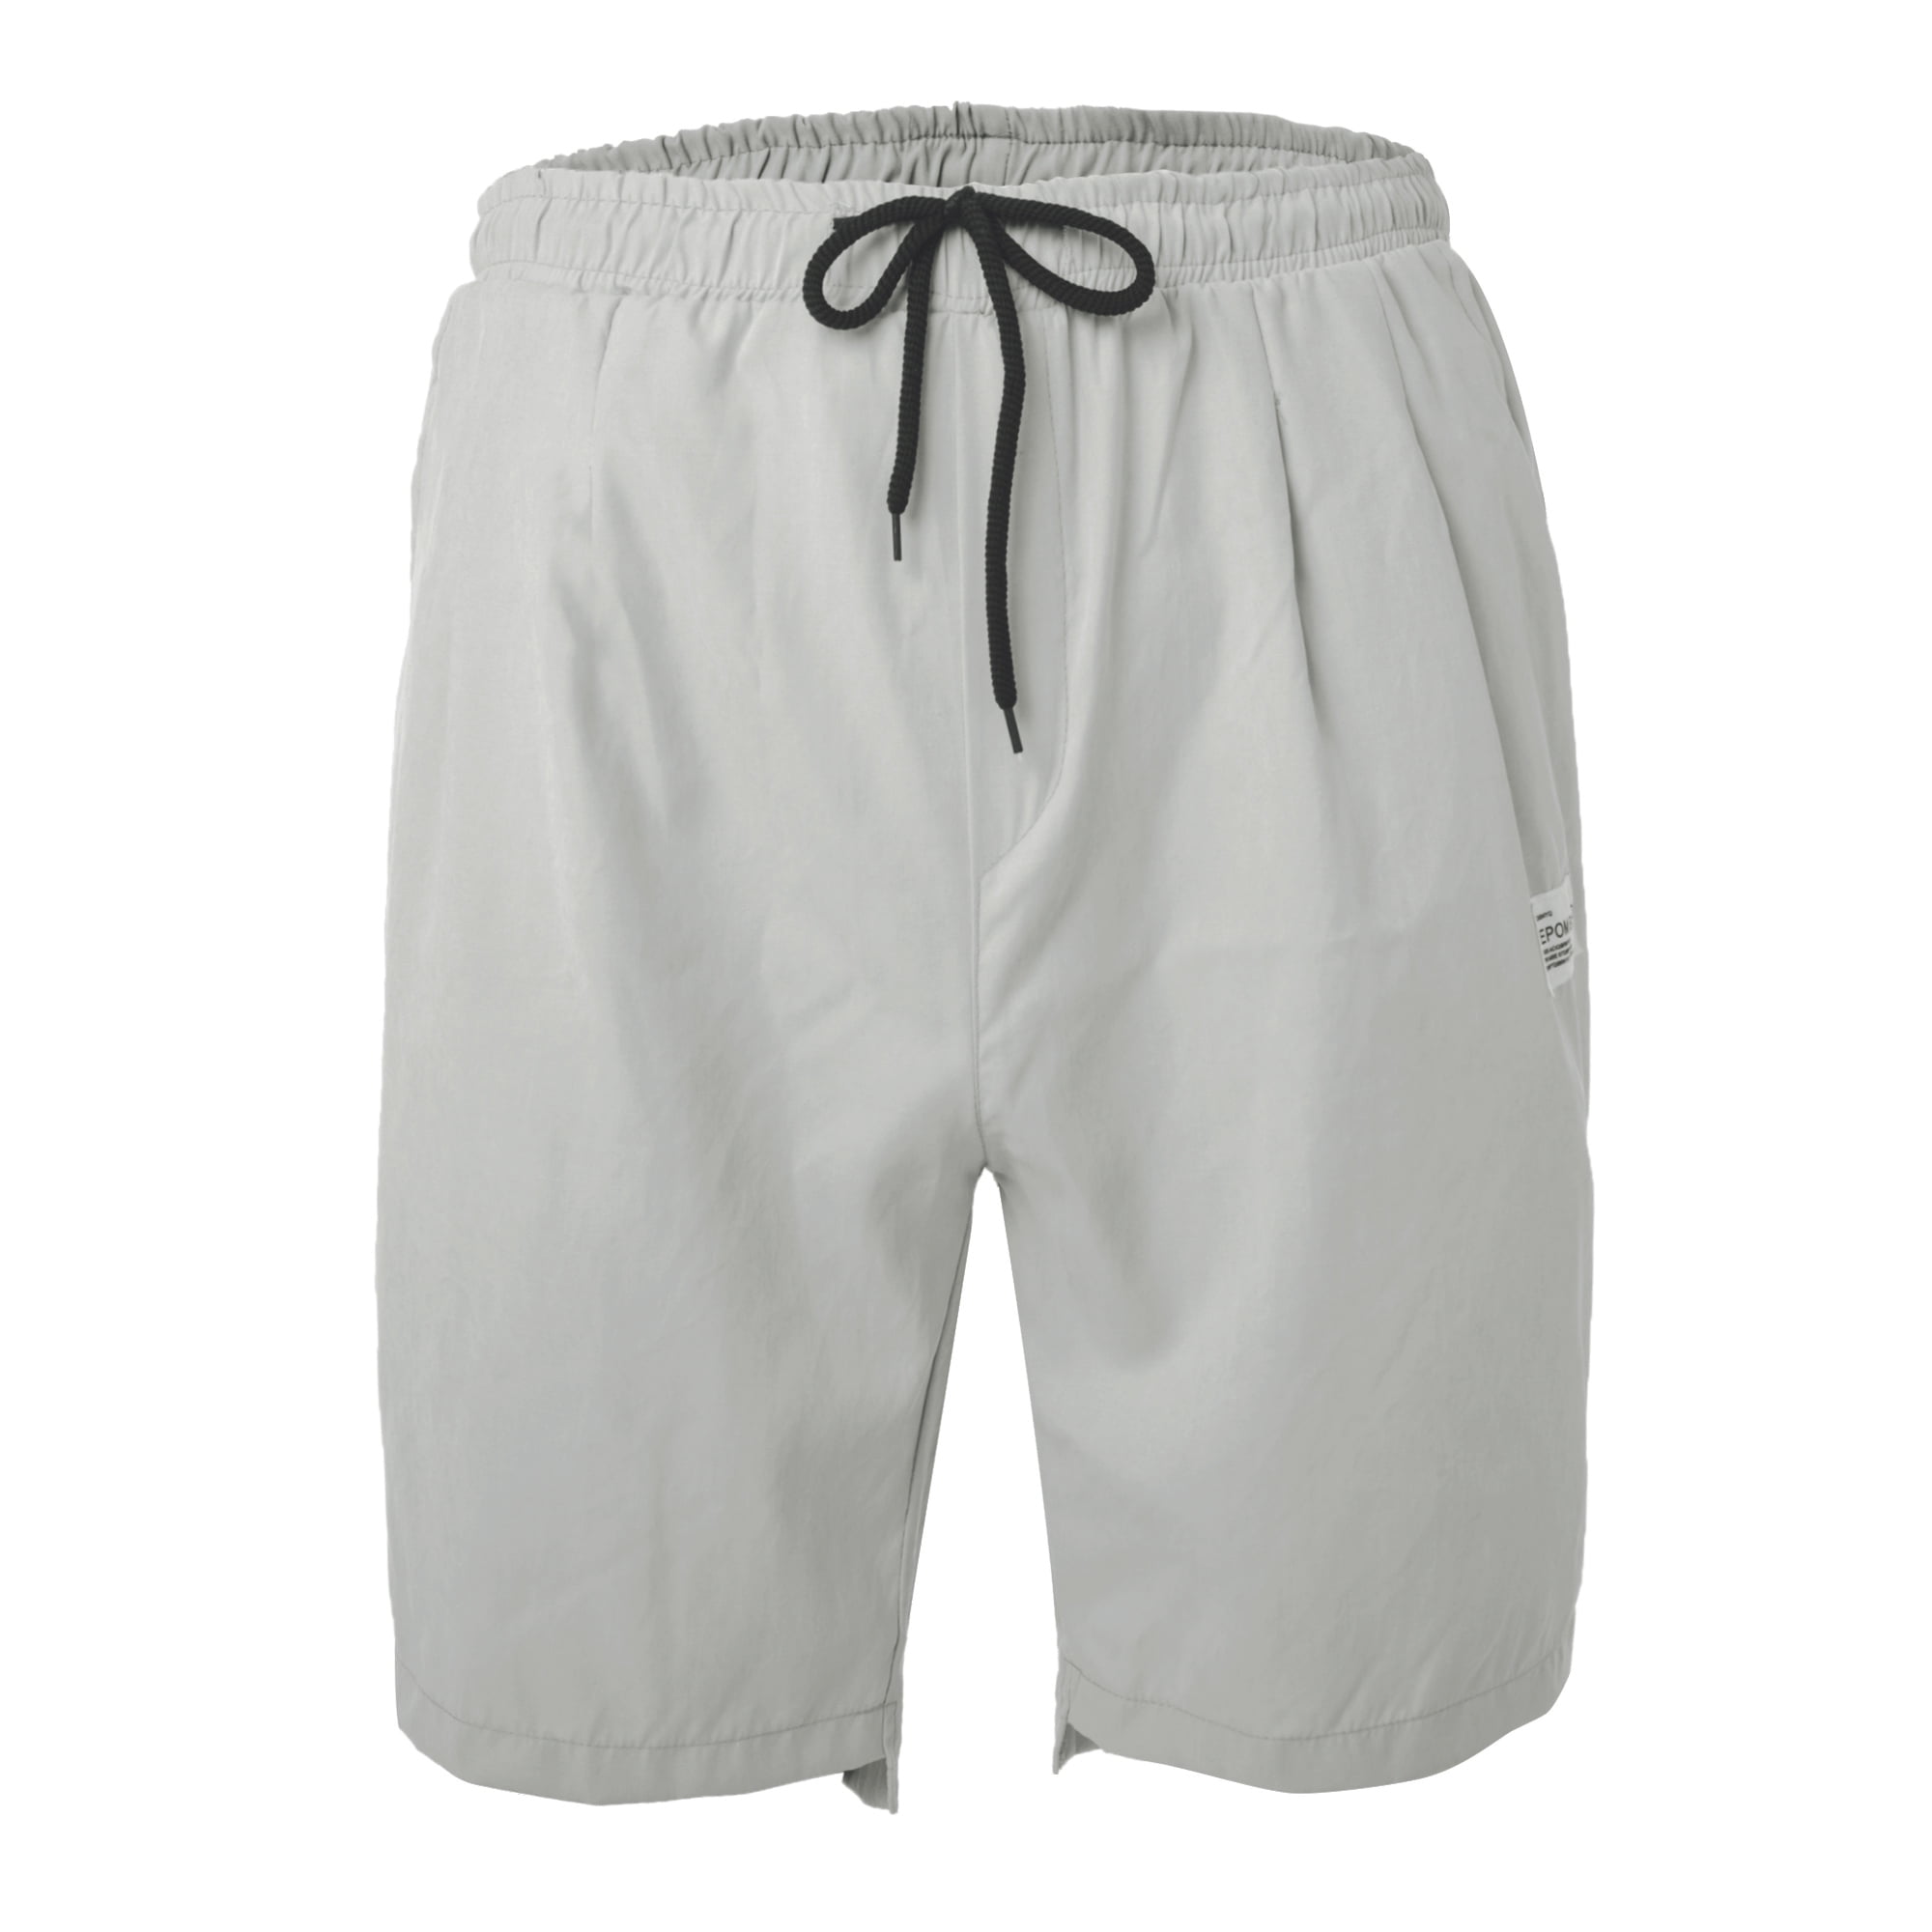 NITAGUT Mens Shorts Casual Fashion Drawstring Elastic Waist Summer Beach Short Classic Fit Workout Short with Pockets 